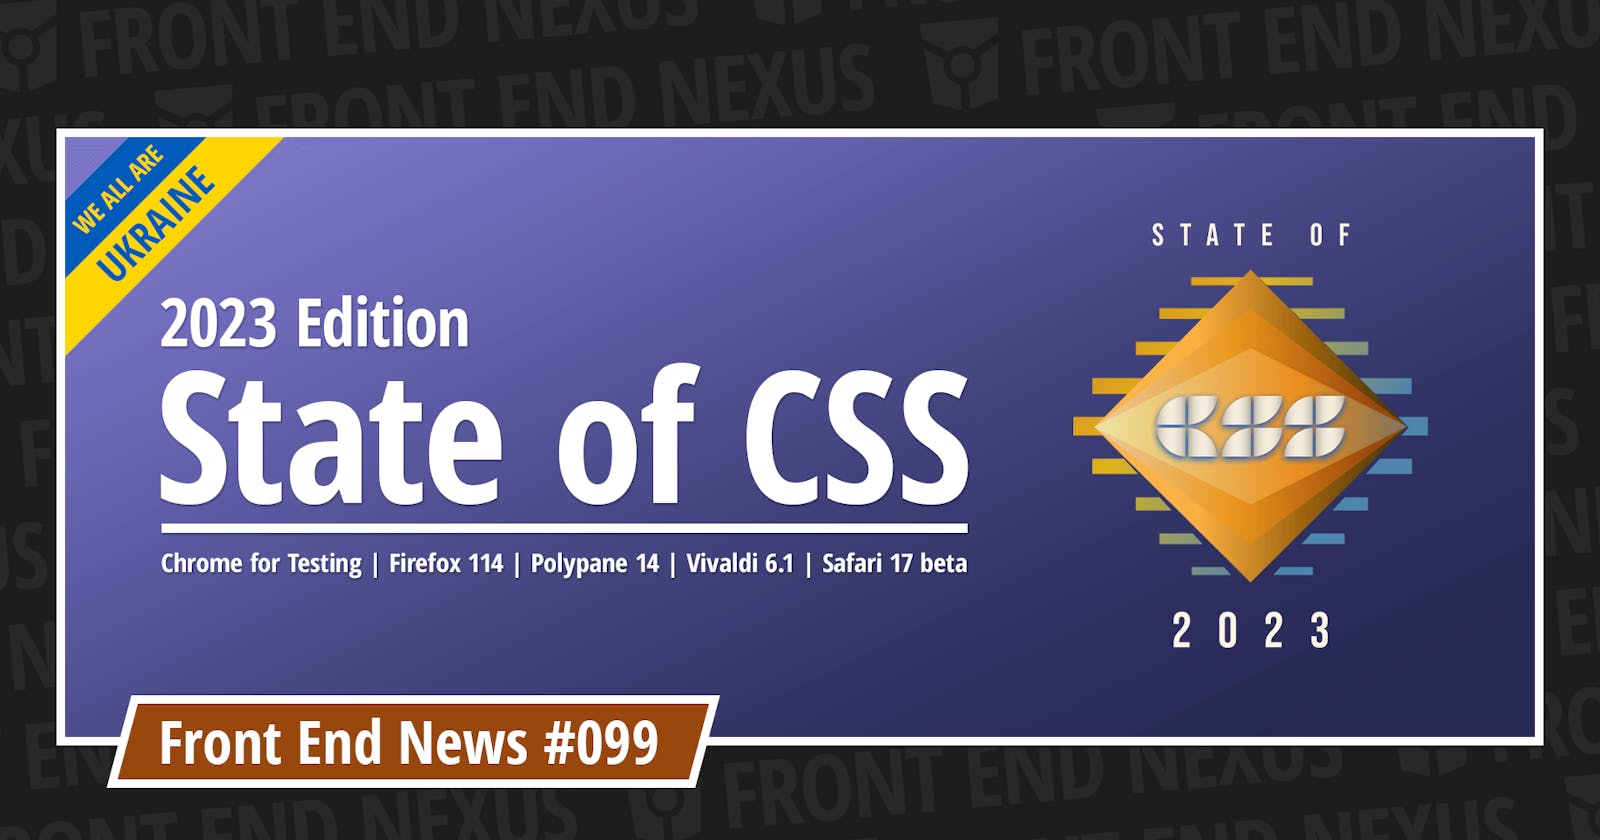 State of CSS 2023, Chrome for Testing, Firefox 114, Polypane 14, Vivaldi 6.1, Safari 17 beta, and more | Front End News #099